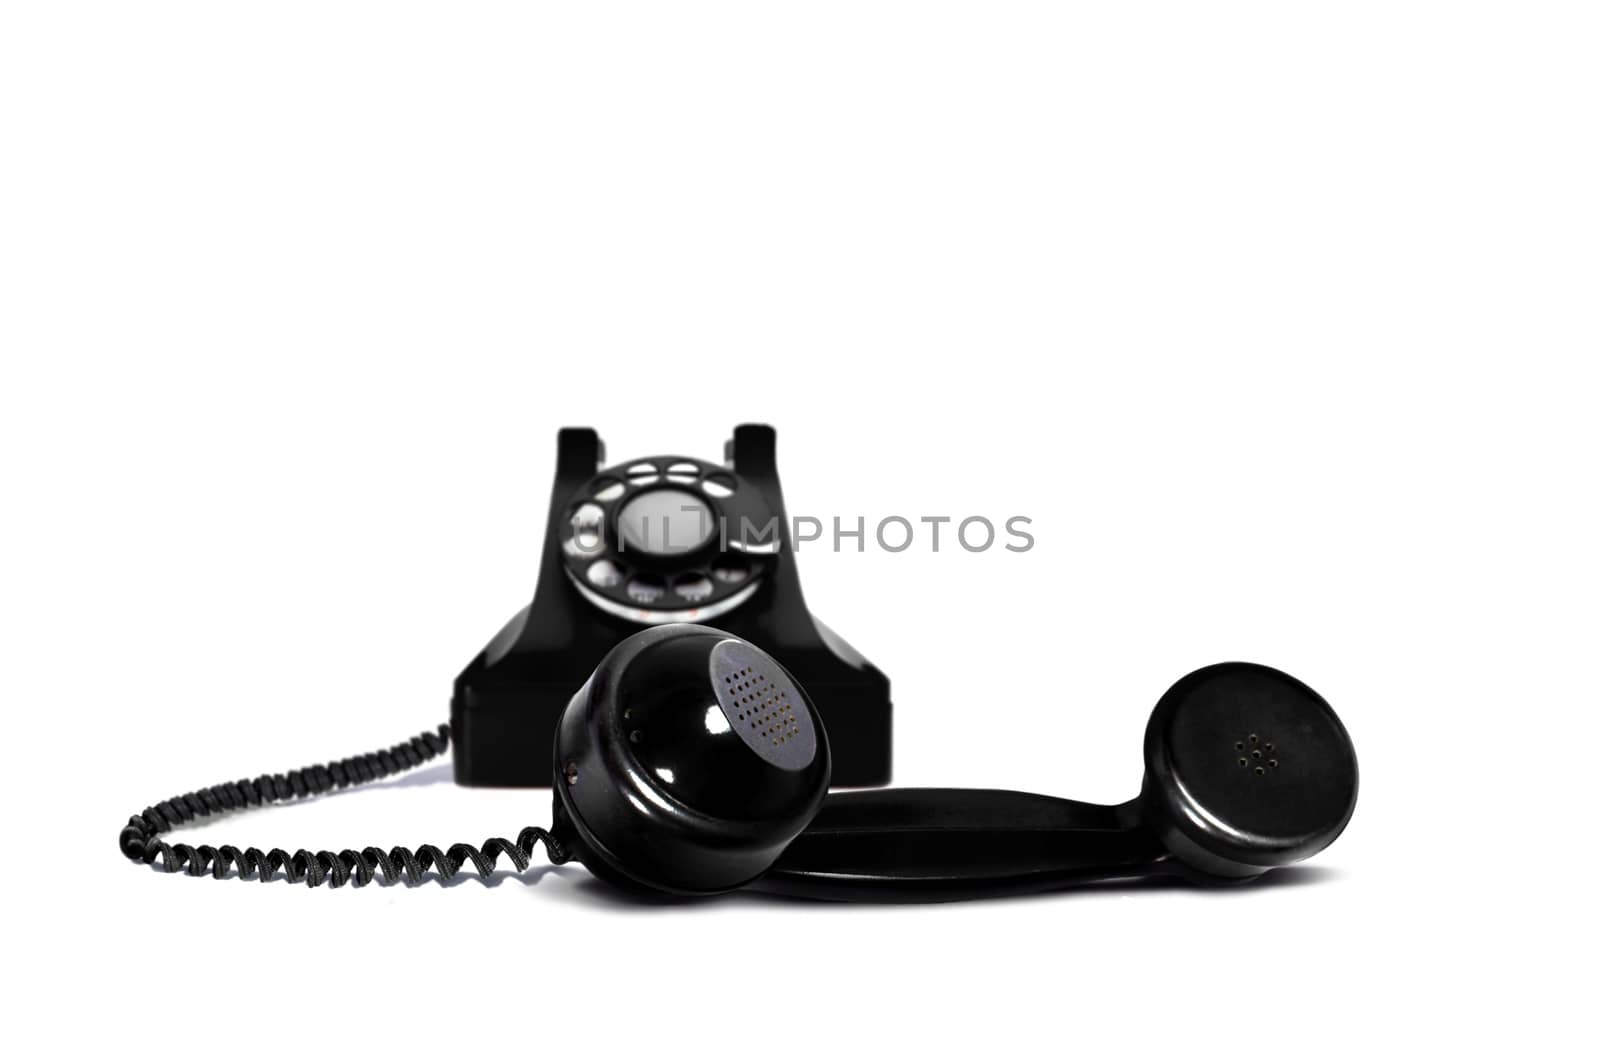 Retro Telephone Receiver by razihusin